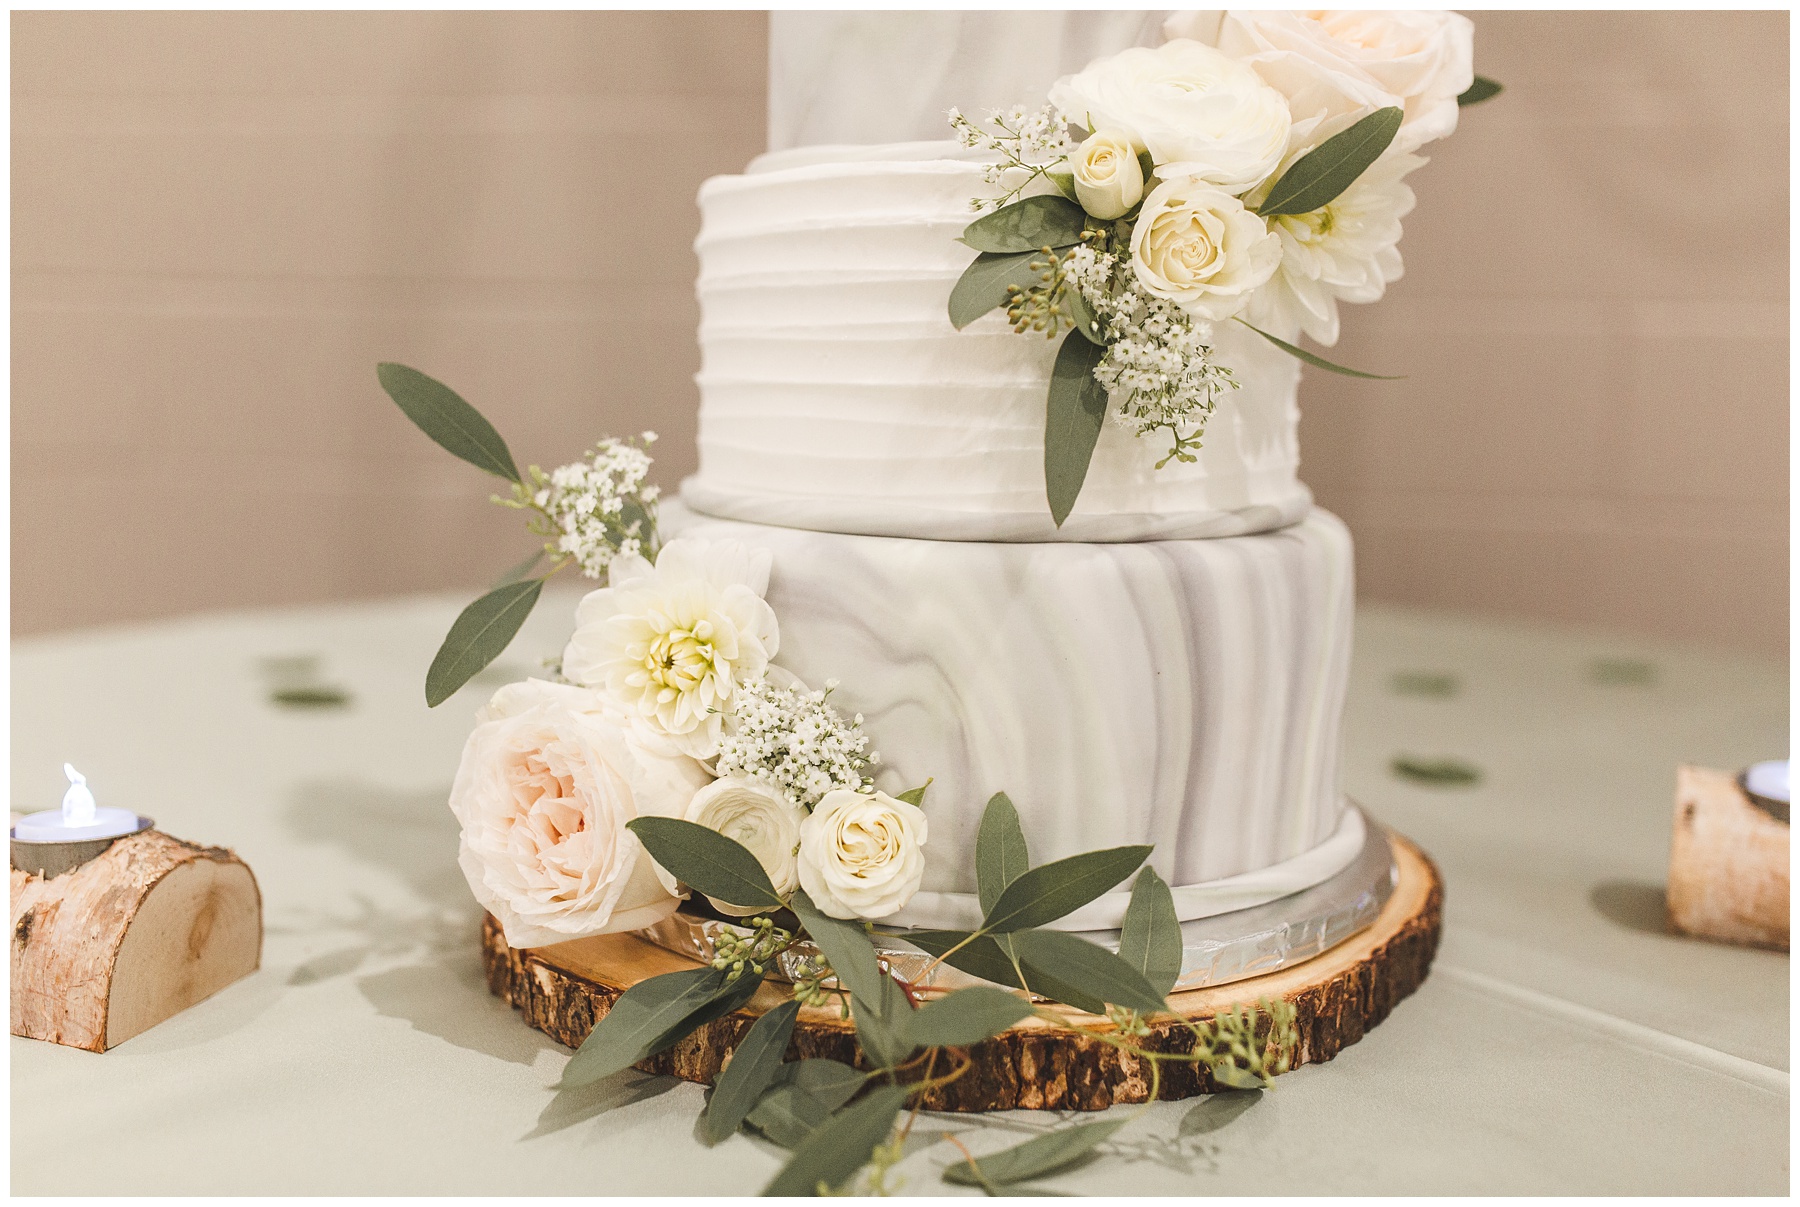 Wedding Photography Inspiration wedding cake at reception